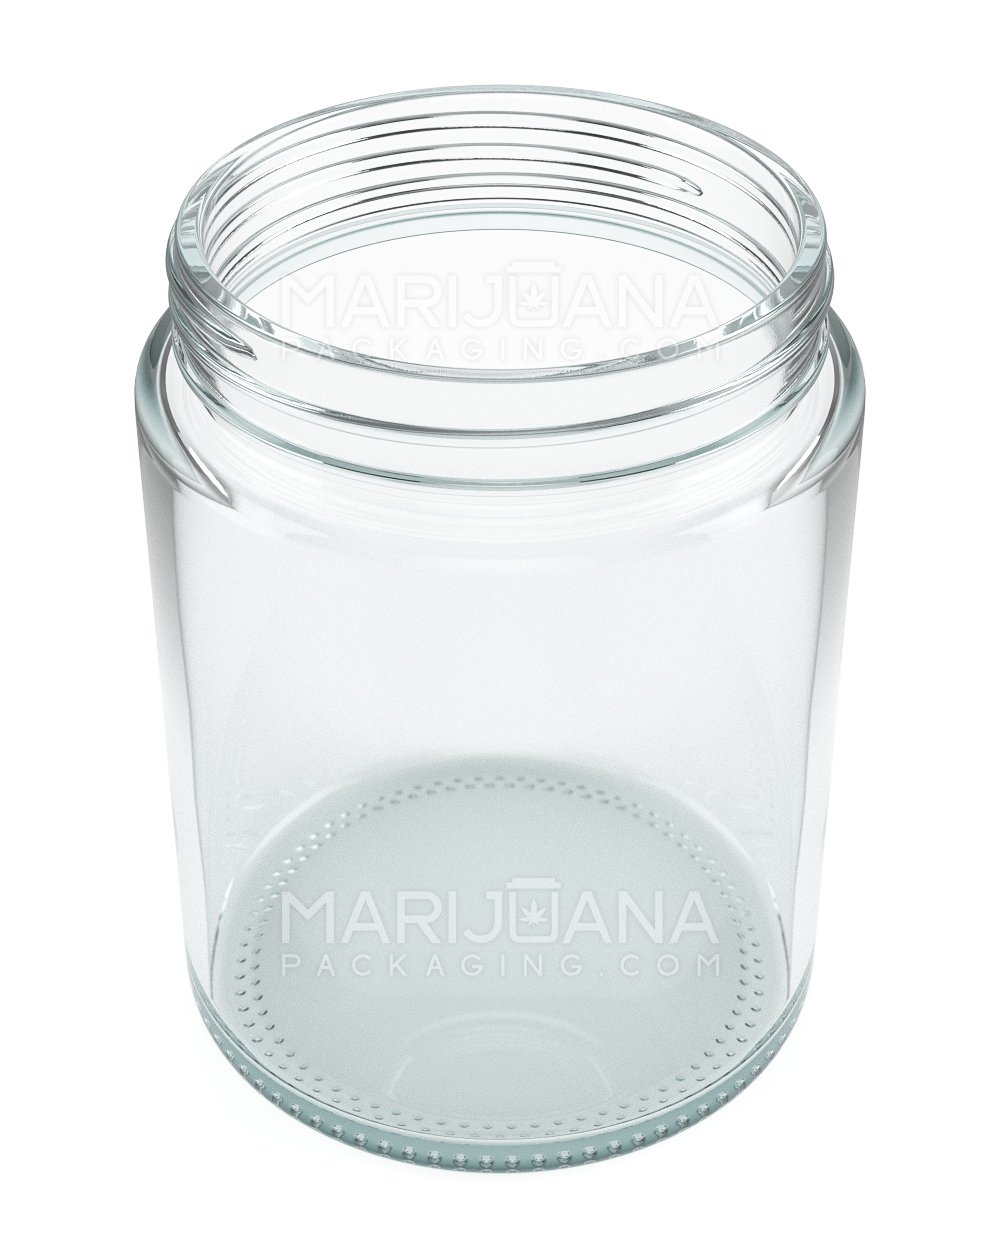 https://cdn.shopify.com/s/files/1/0039/0574/9105/products/straight-sided-glass-jars-78mm-18oz-48-count-dispensary-supply-marijuana-packaging-632558.jpg?v=1593775950&width=1000